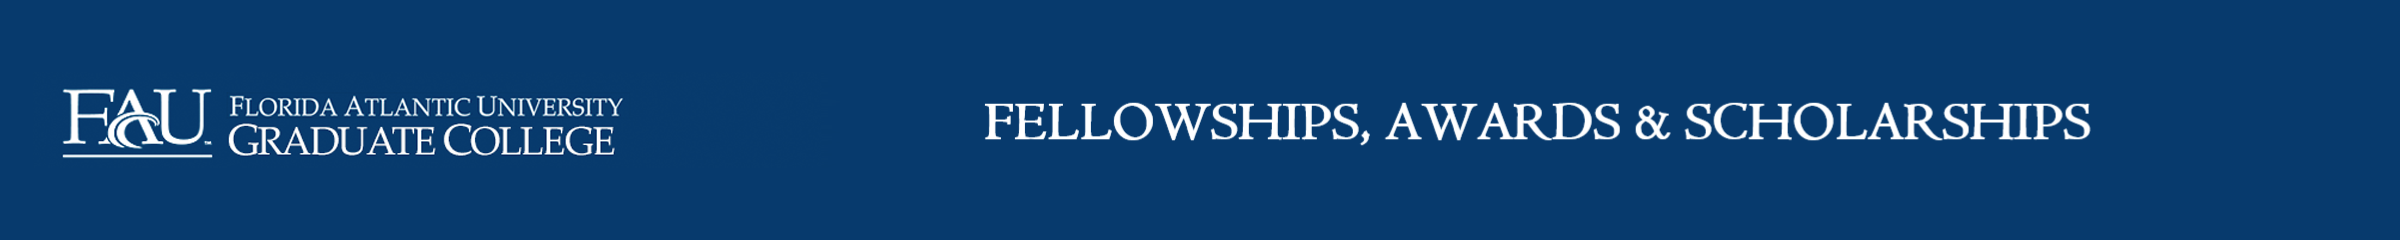 FAU Awards, Scholarships and Fellowships logo